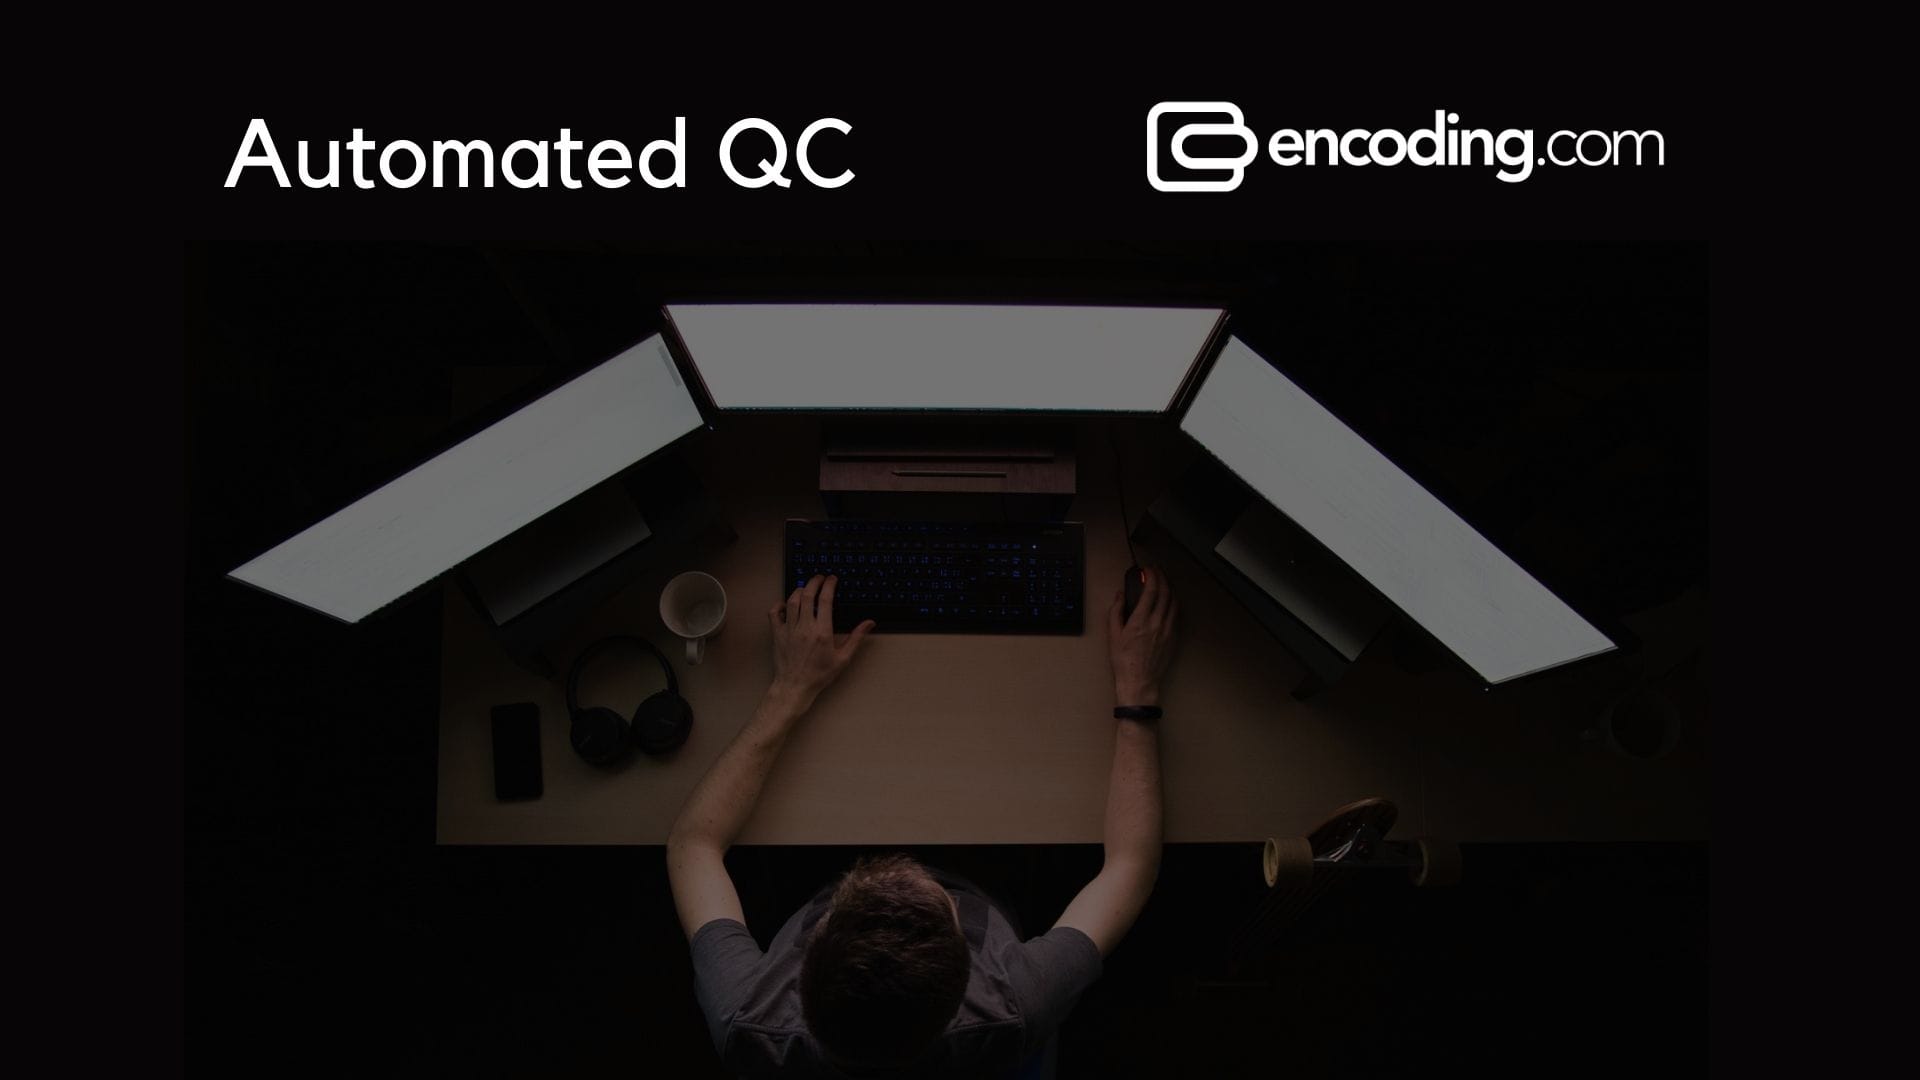 Encoding.com Automated QC